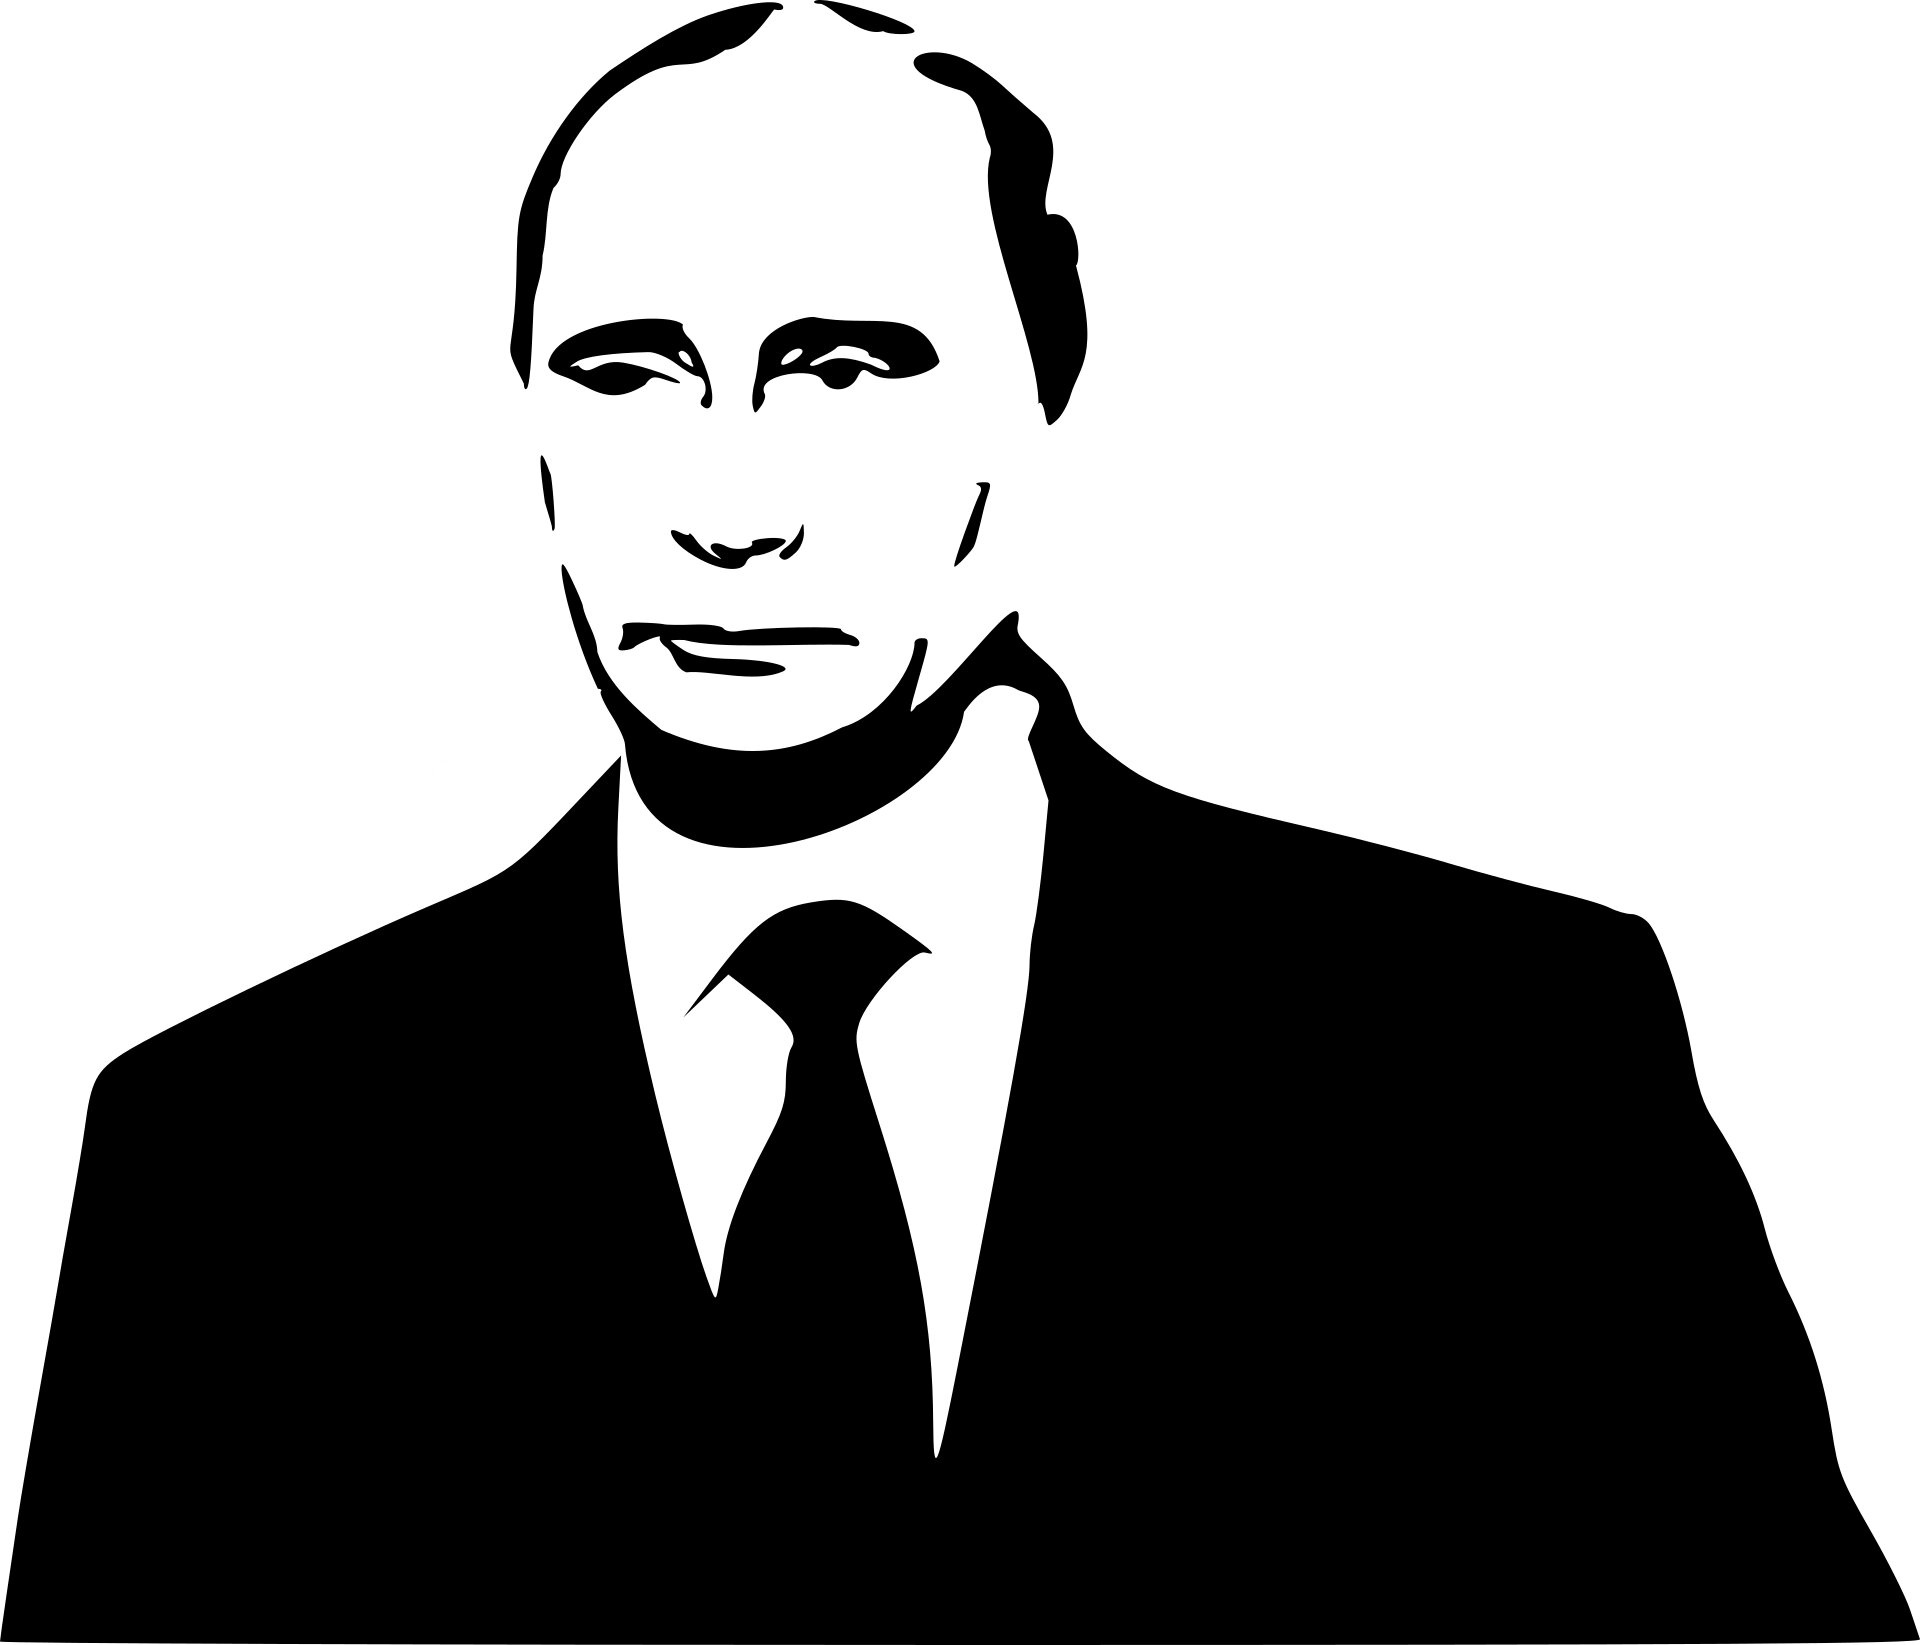 Russia’s shadow war: Vulkan files leak show how Putin’s regime weaponizes cyberspace